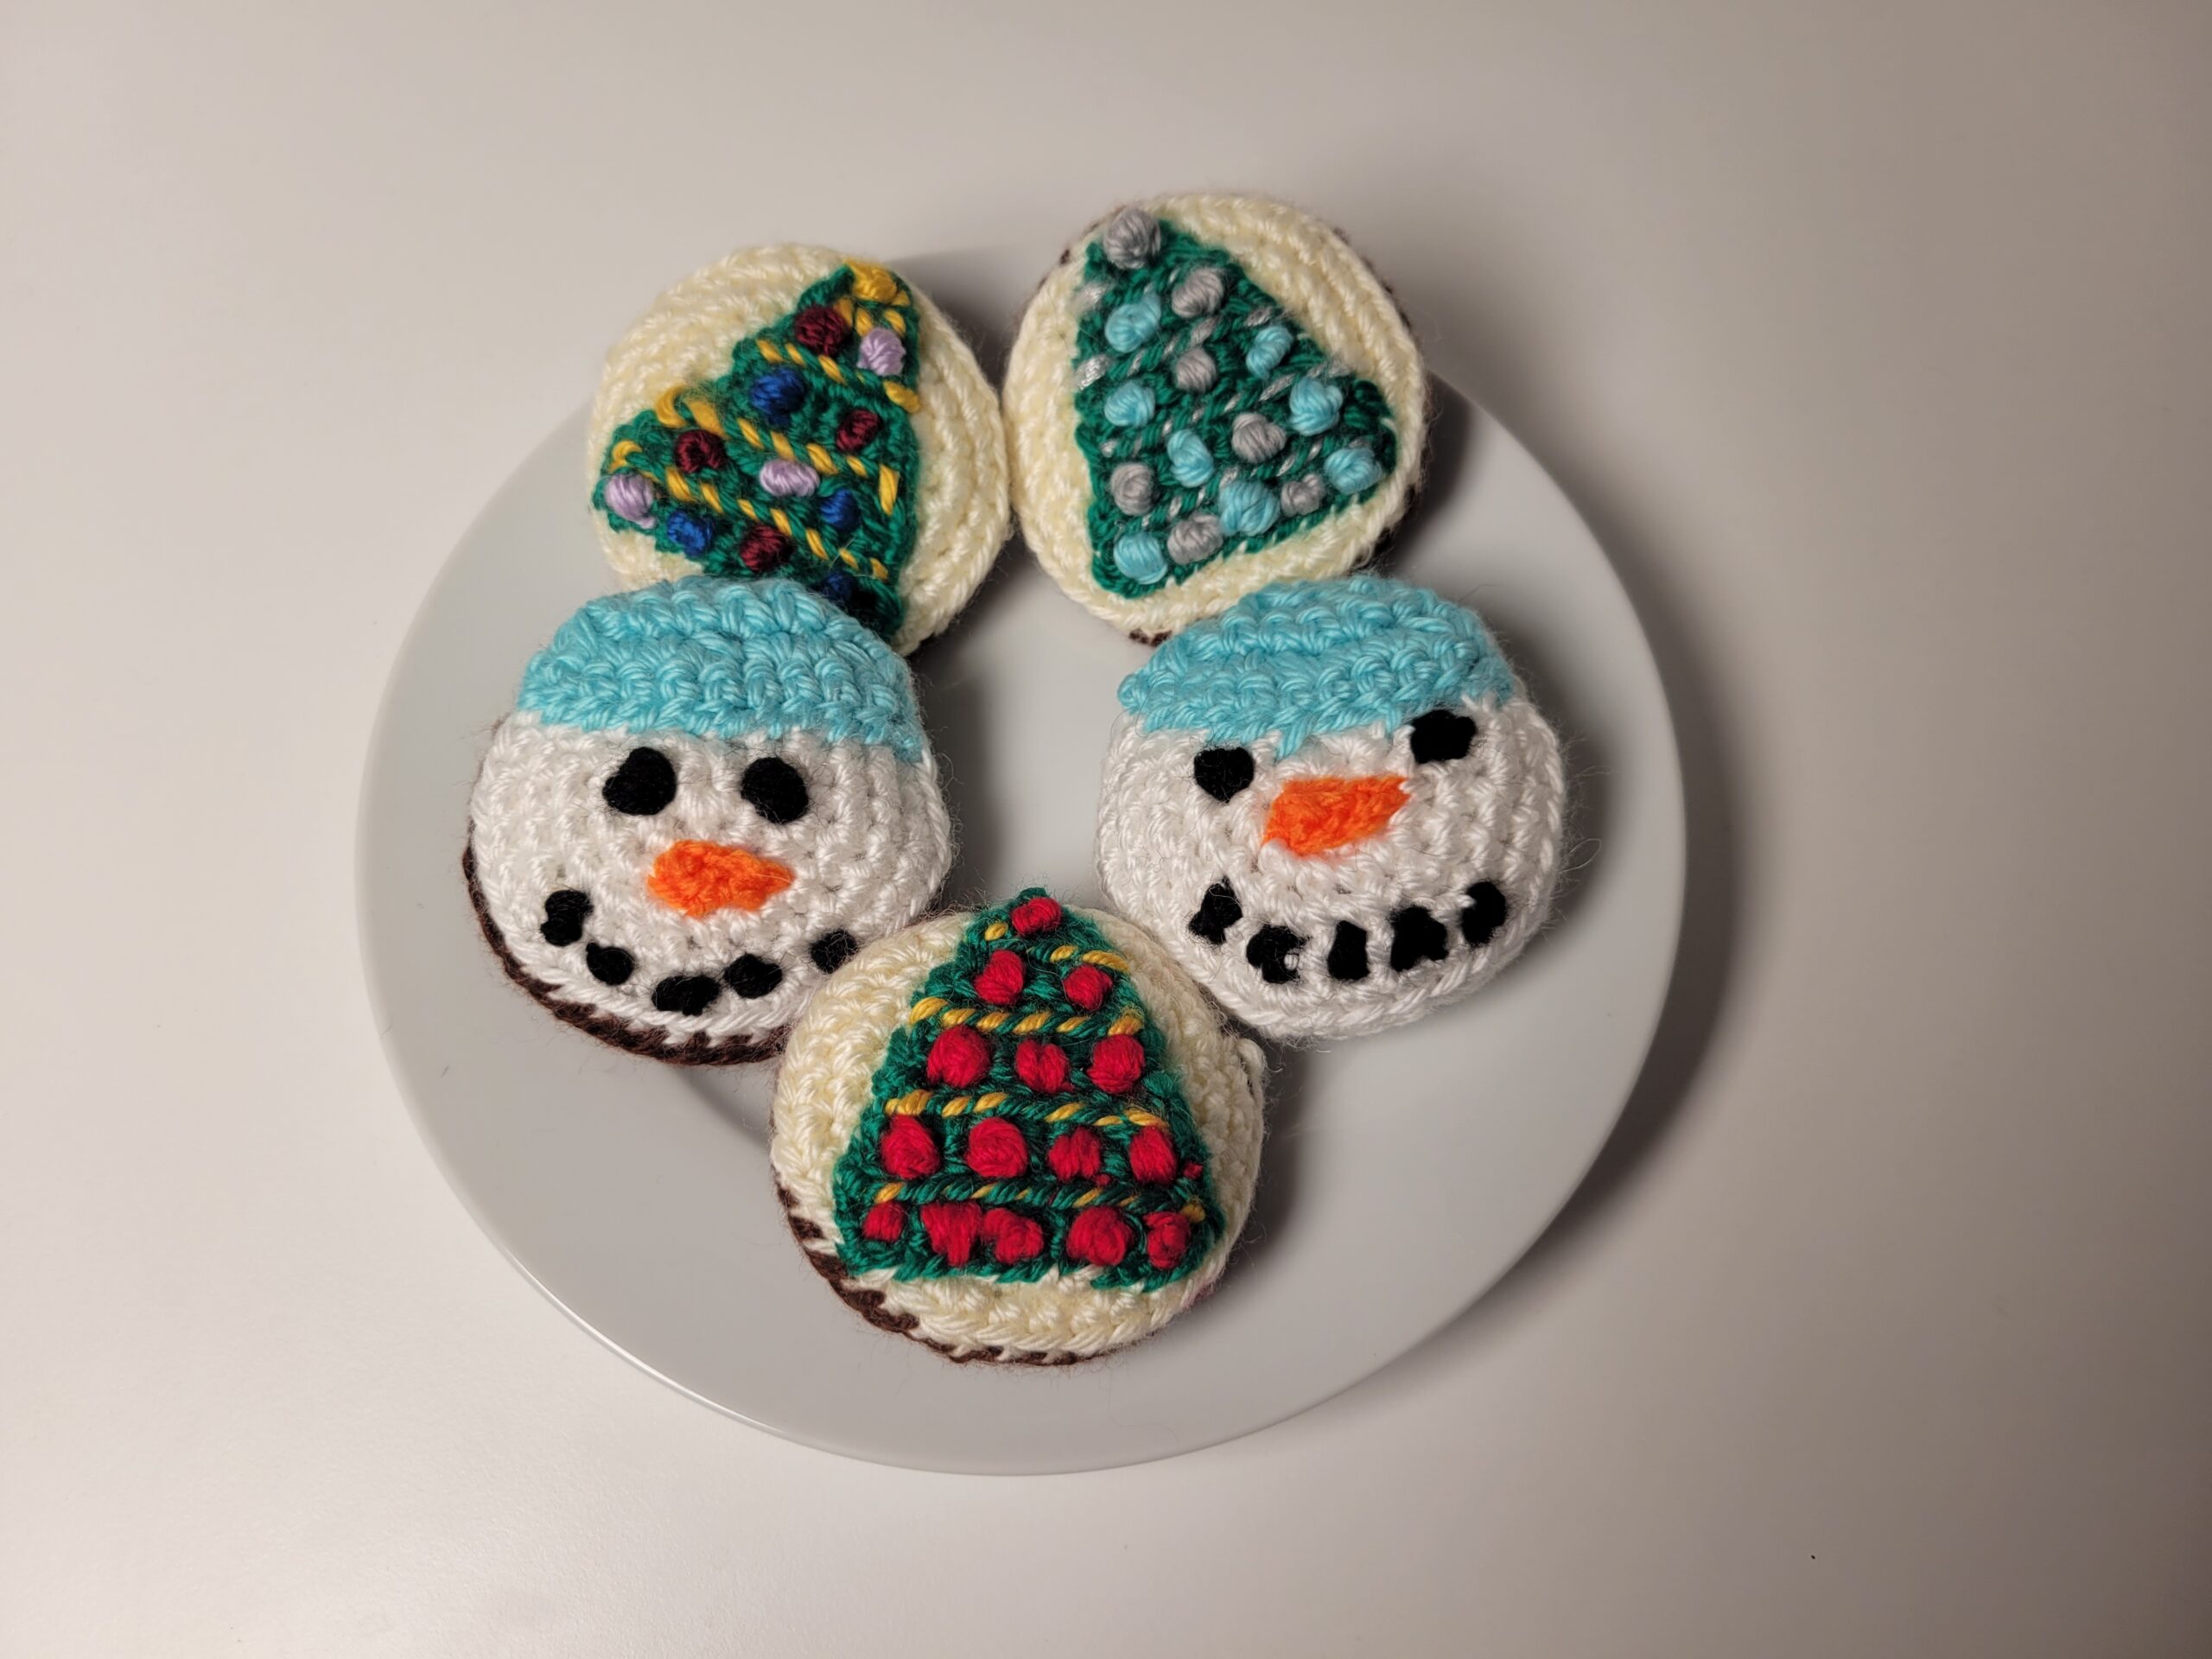 How to Crochet a Snowman Sugar Cookie